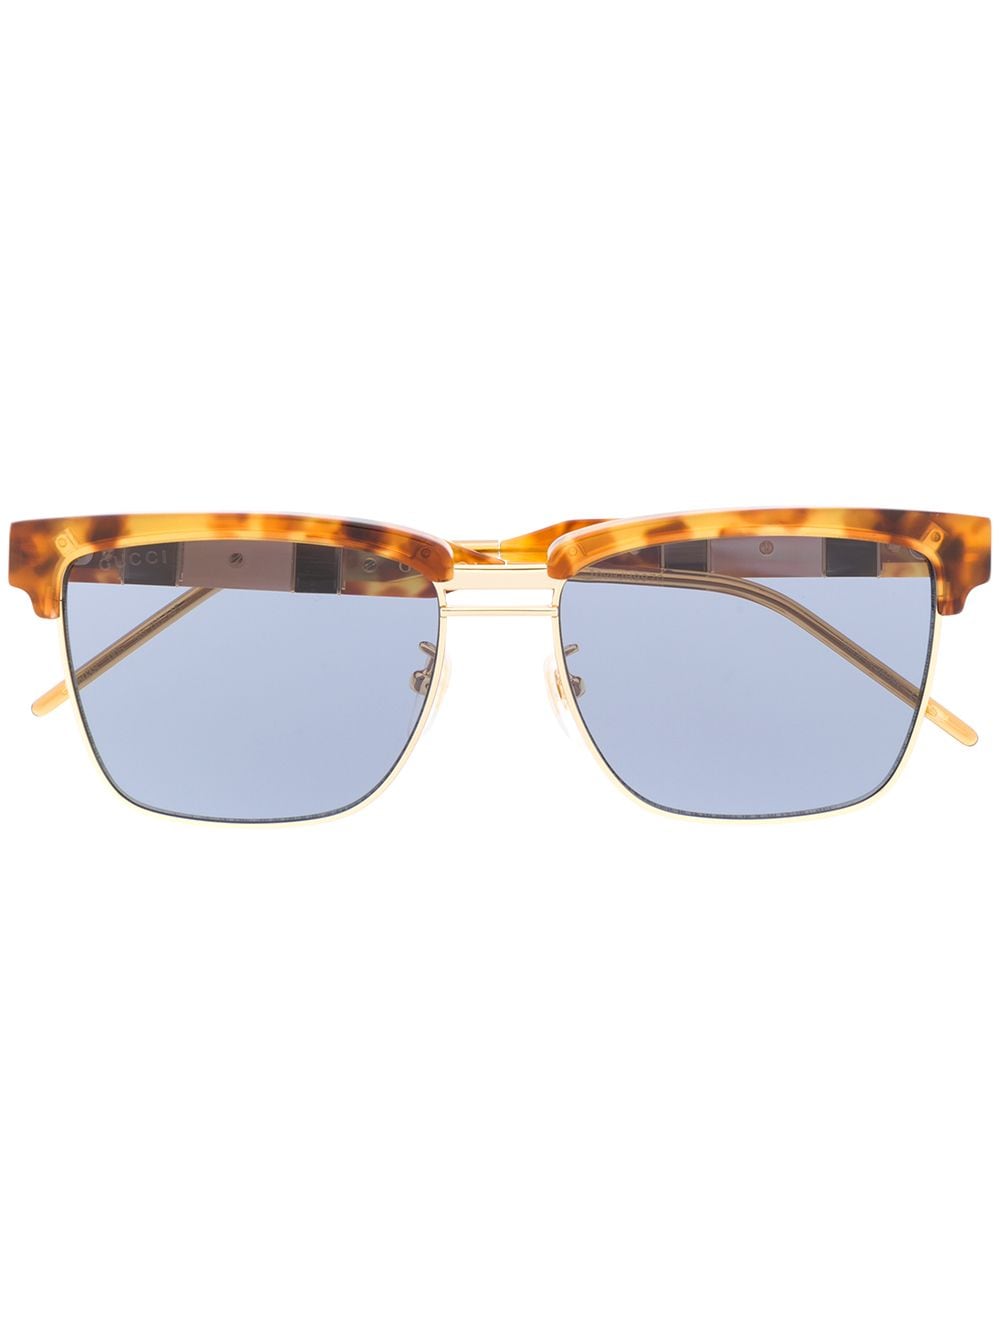 Gucci Eyewear солнцезащитные очки черепаховой расцветки от Gucci Eyewear